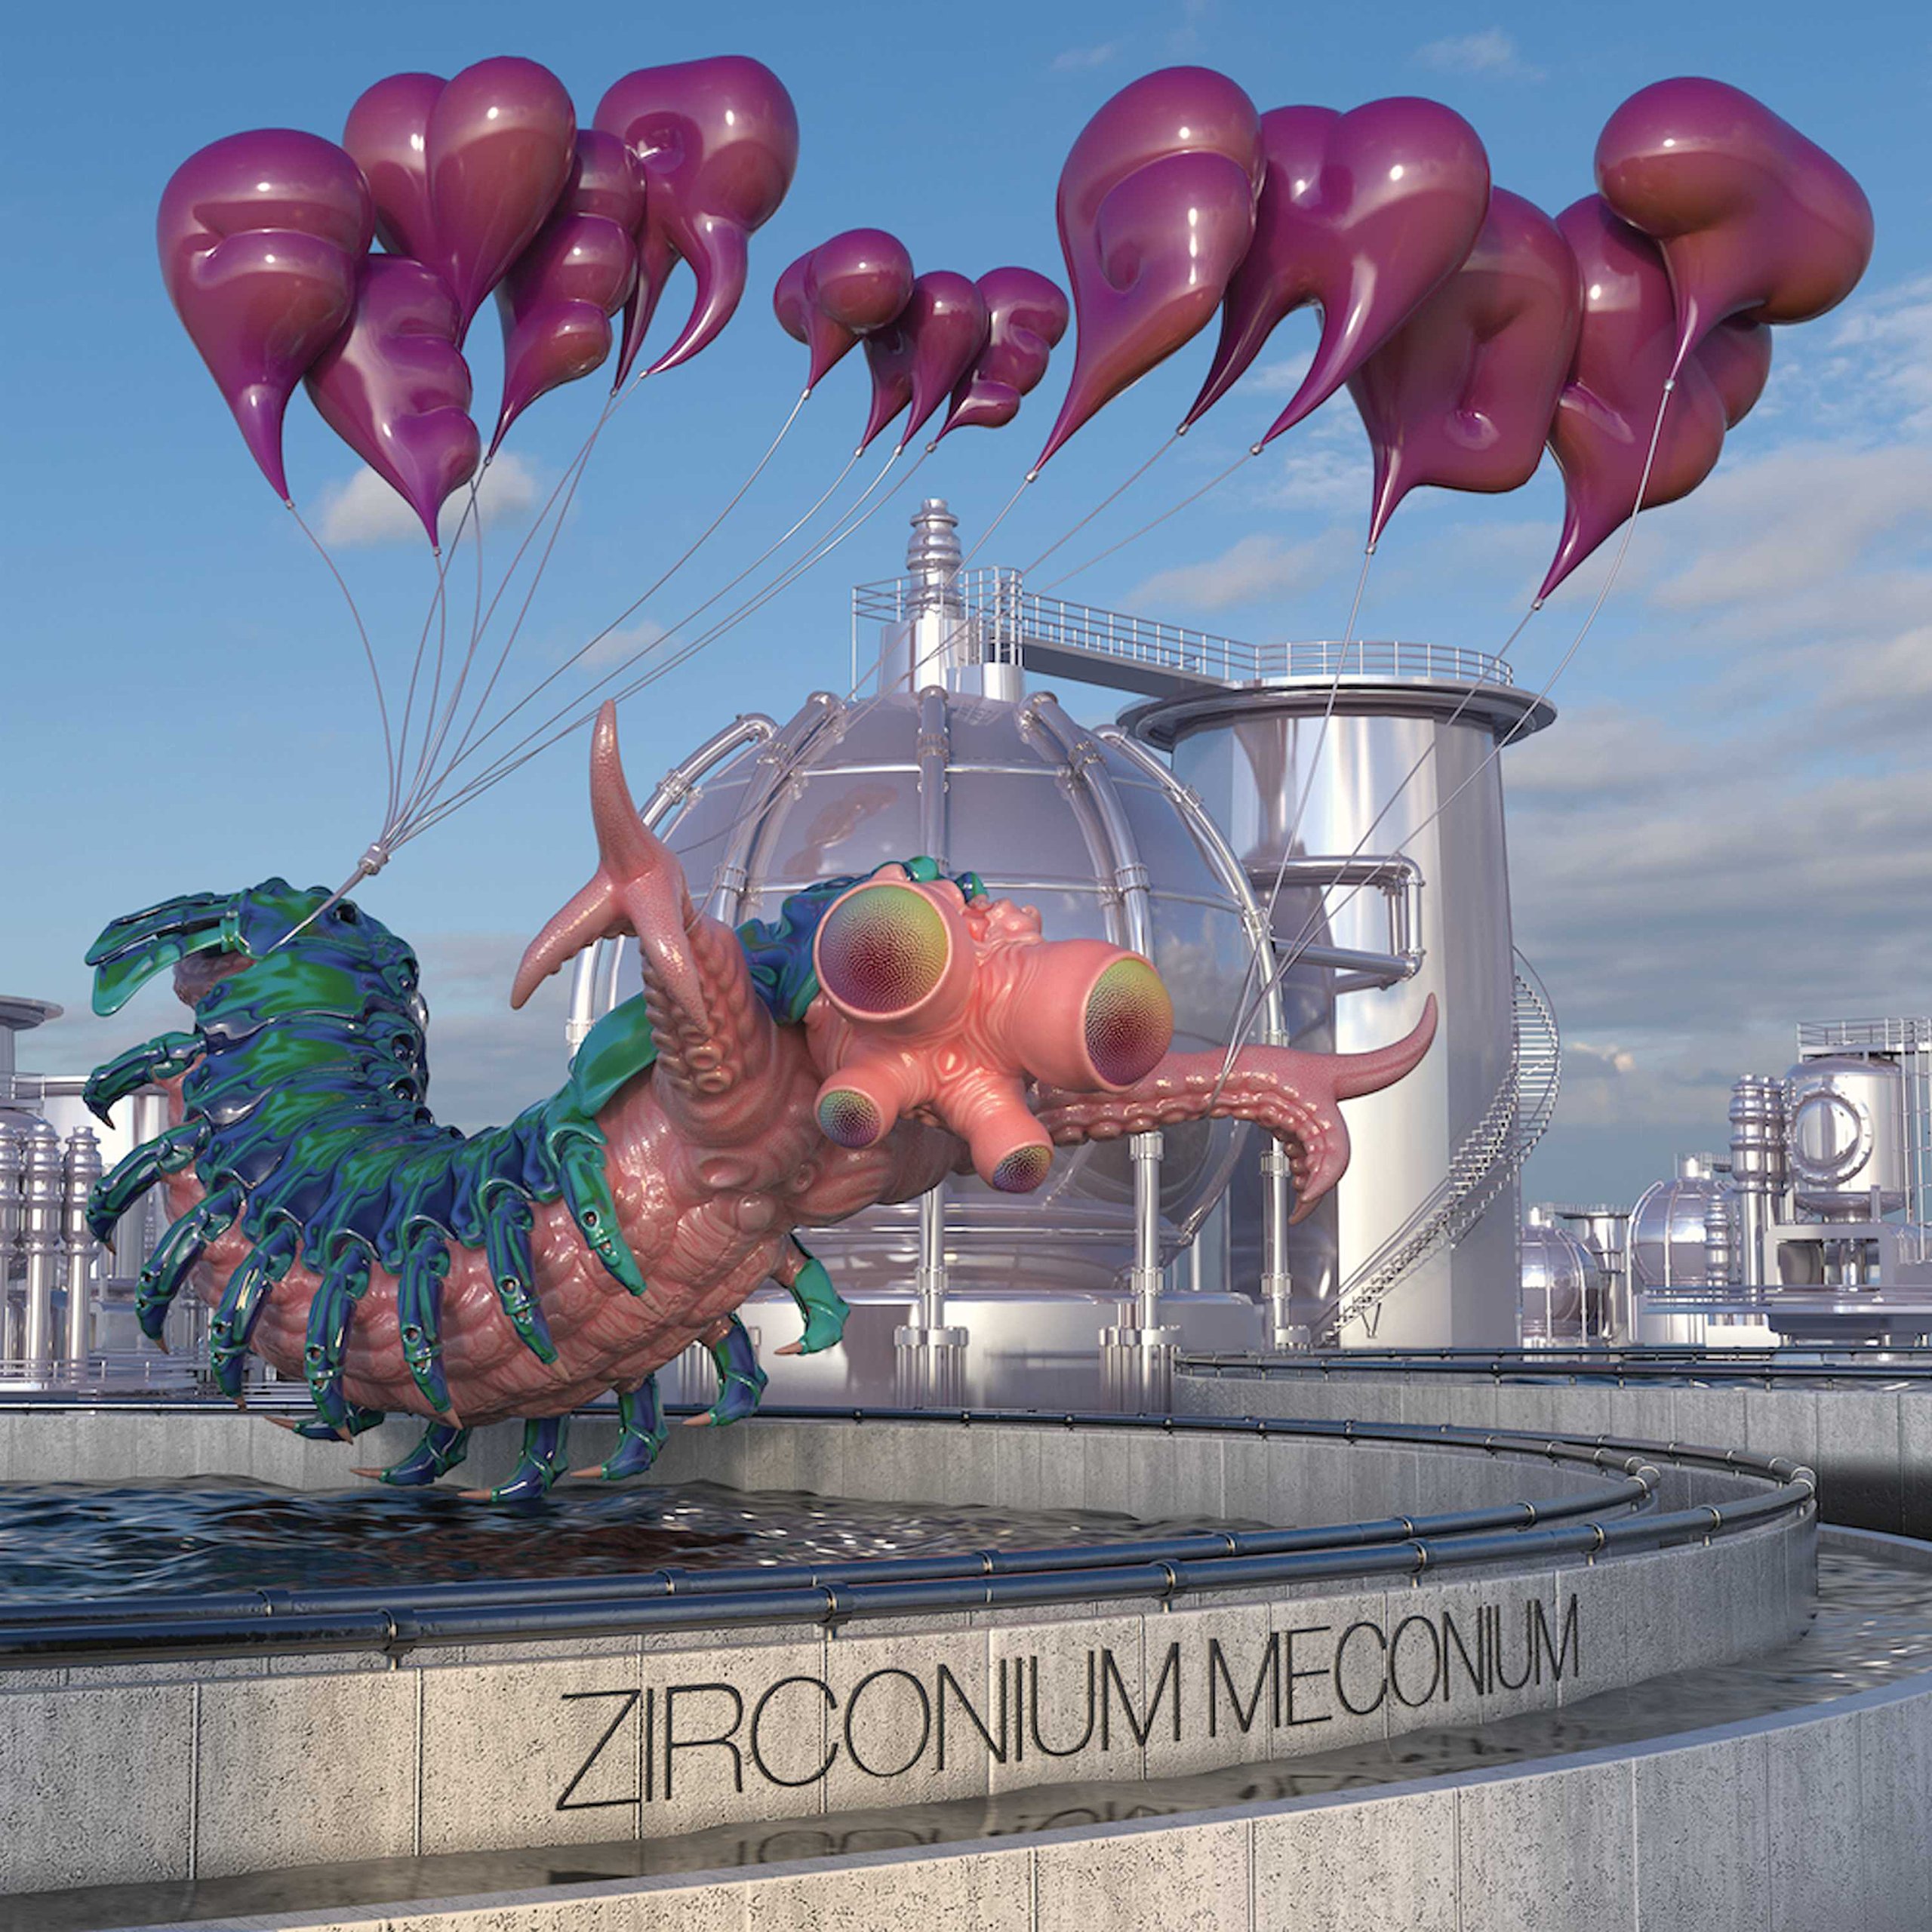 Zirconium Meconium (Vinyl) on MovieShack